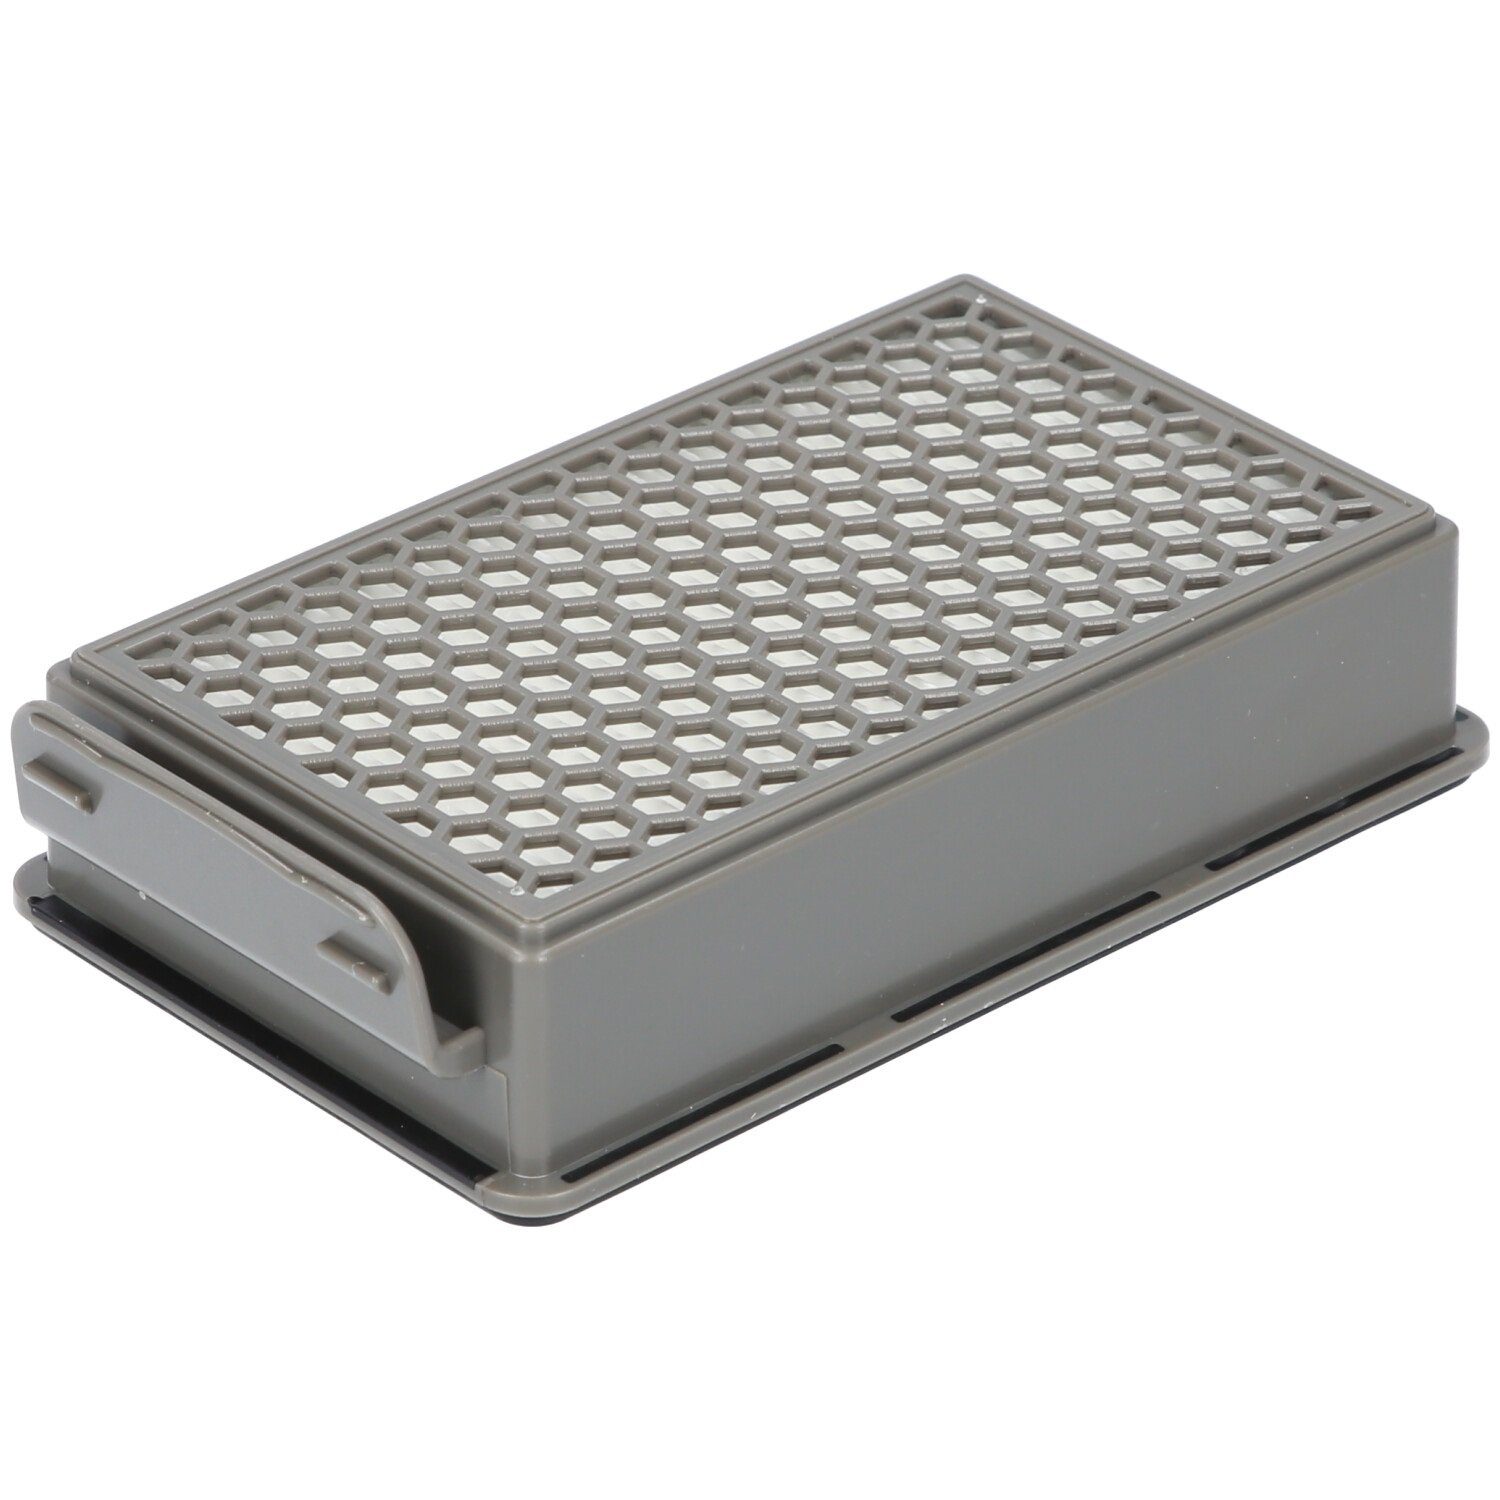 McFilter Filter-Set geeignet / 2x / MO3951PA MO3967PA MO3953PA MO3985PA, für 2x Moulinex / für MO3969PA, Rundfilter, Alternativ ZR005901 Filterkassette